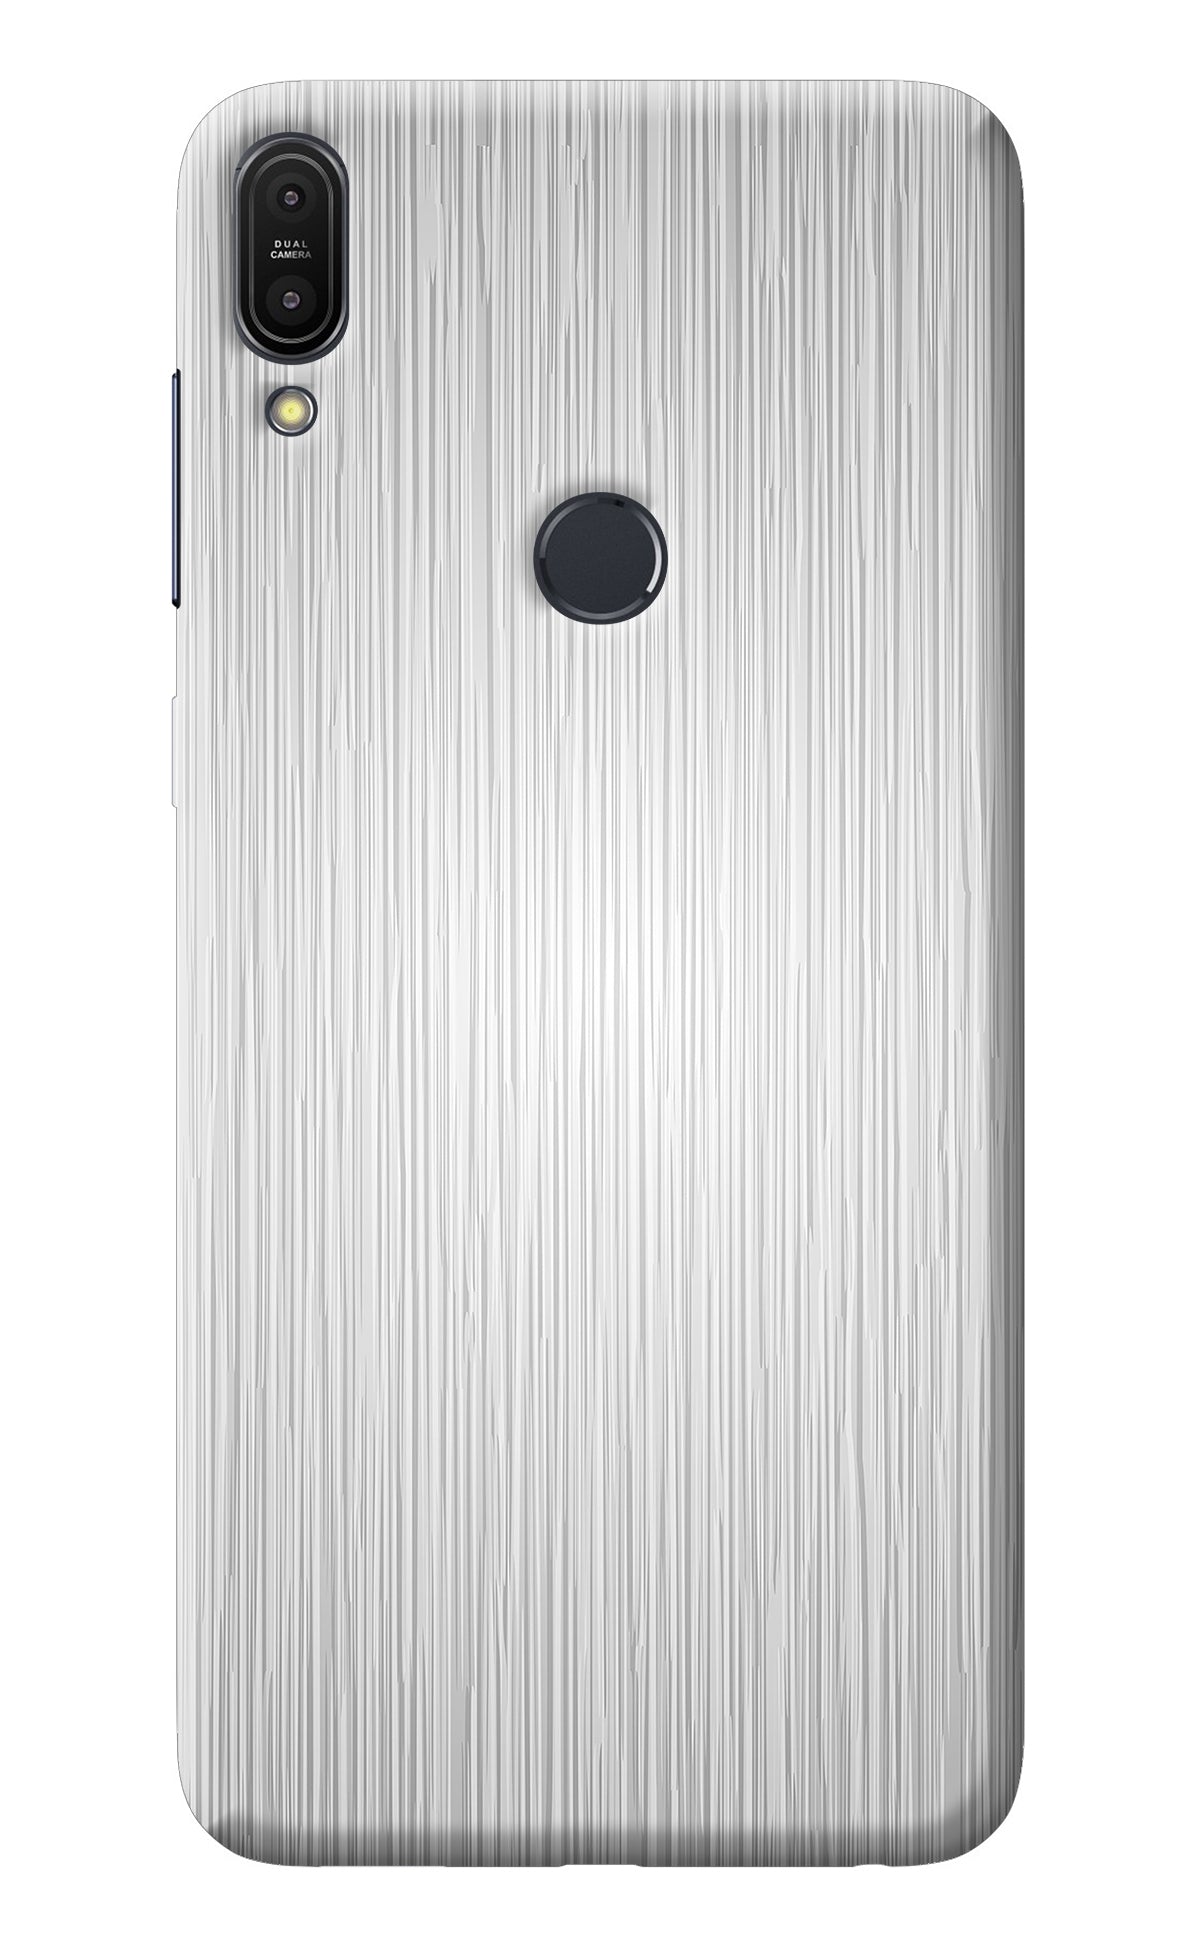 Wooden Grey Texture Asus Zenfone Max Pro M1 Back Cover